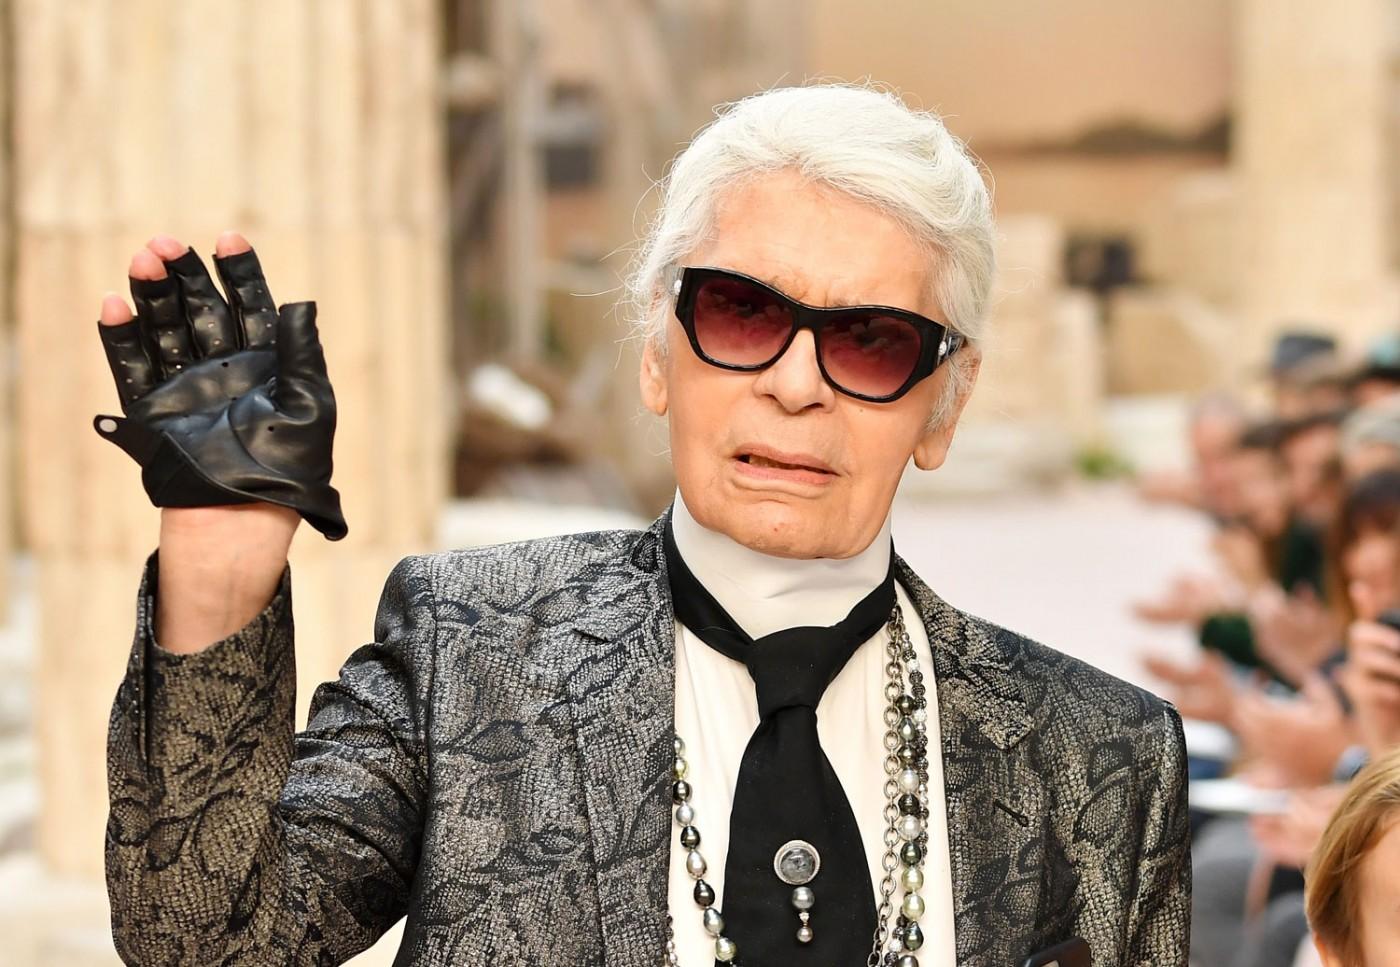 Karl Lagerfeld, fashion designer who reinvented Chanel, dies at 85